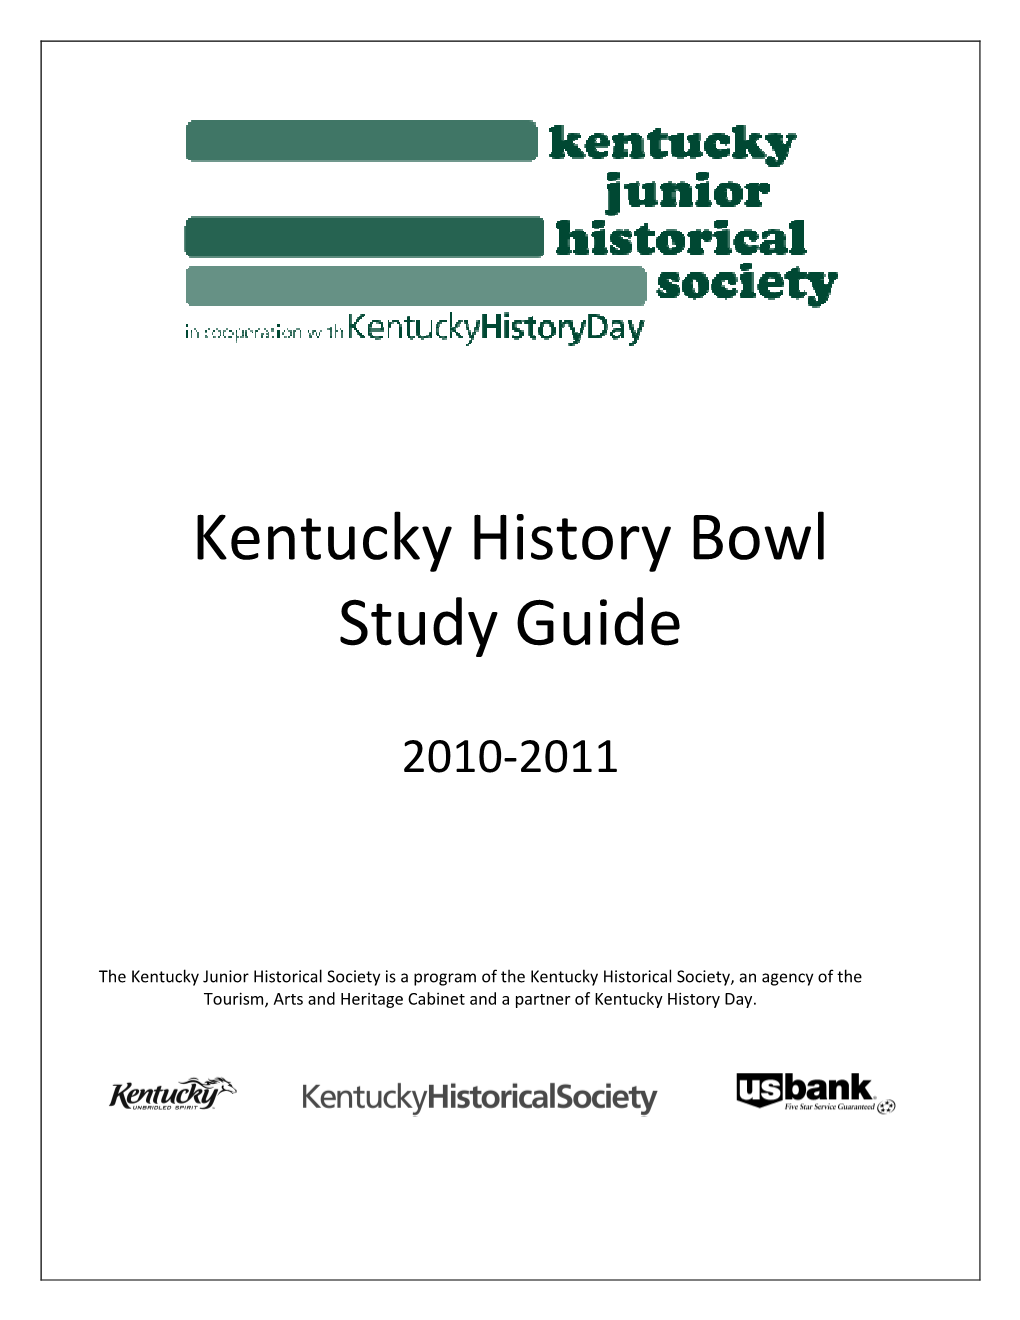 Kentucky History Bowl Study Guide